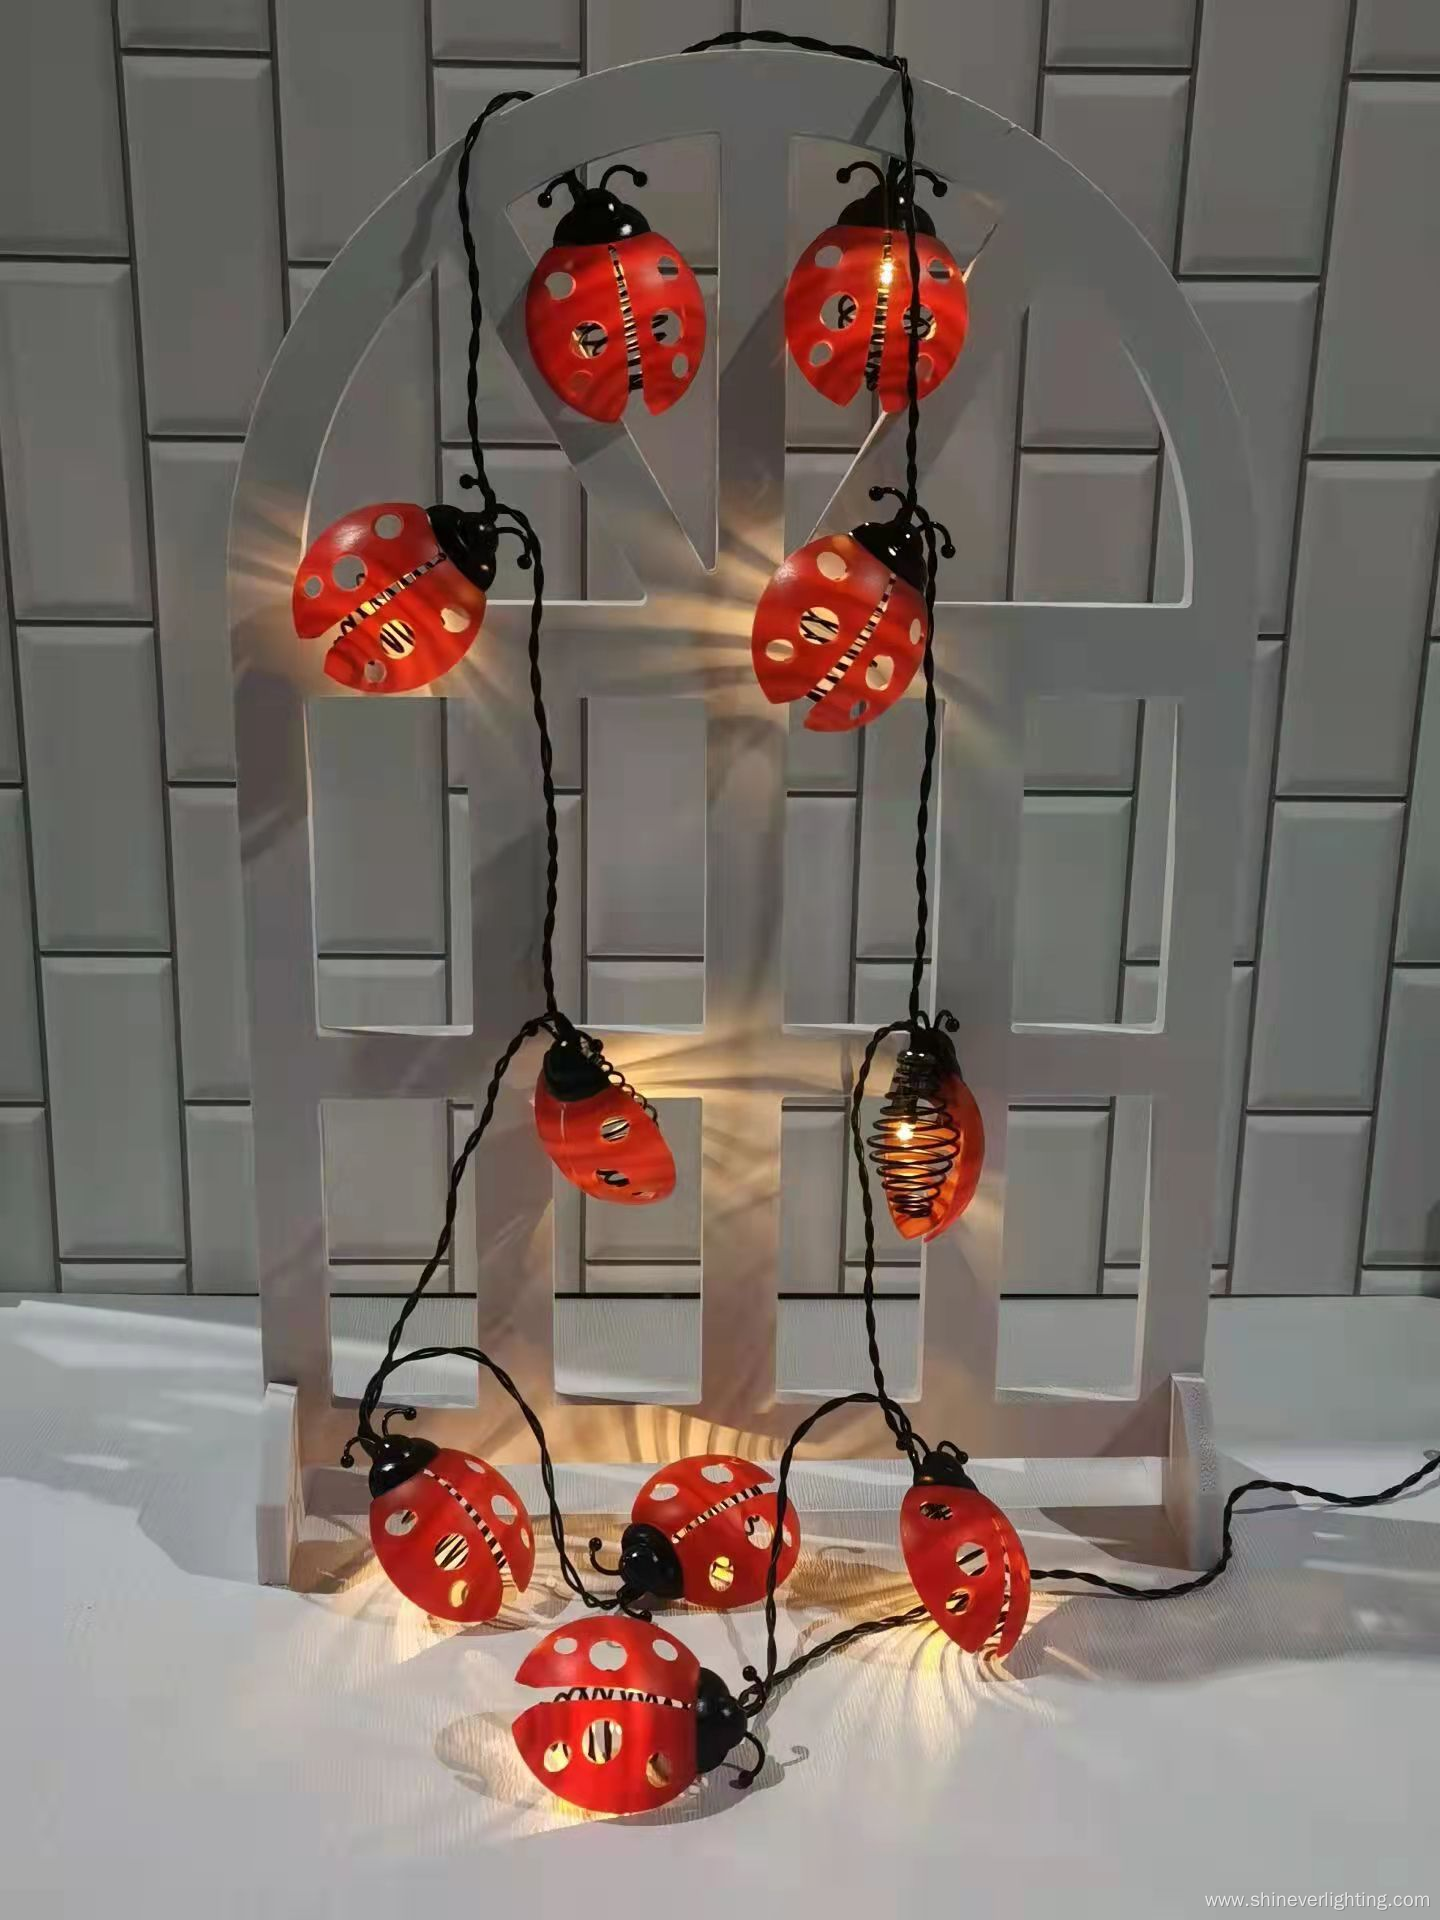 Waterproof Solar Festival Ladybug Style String Light